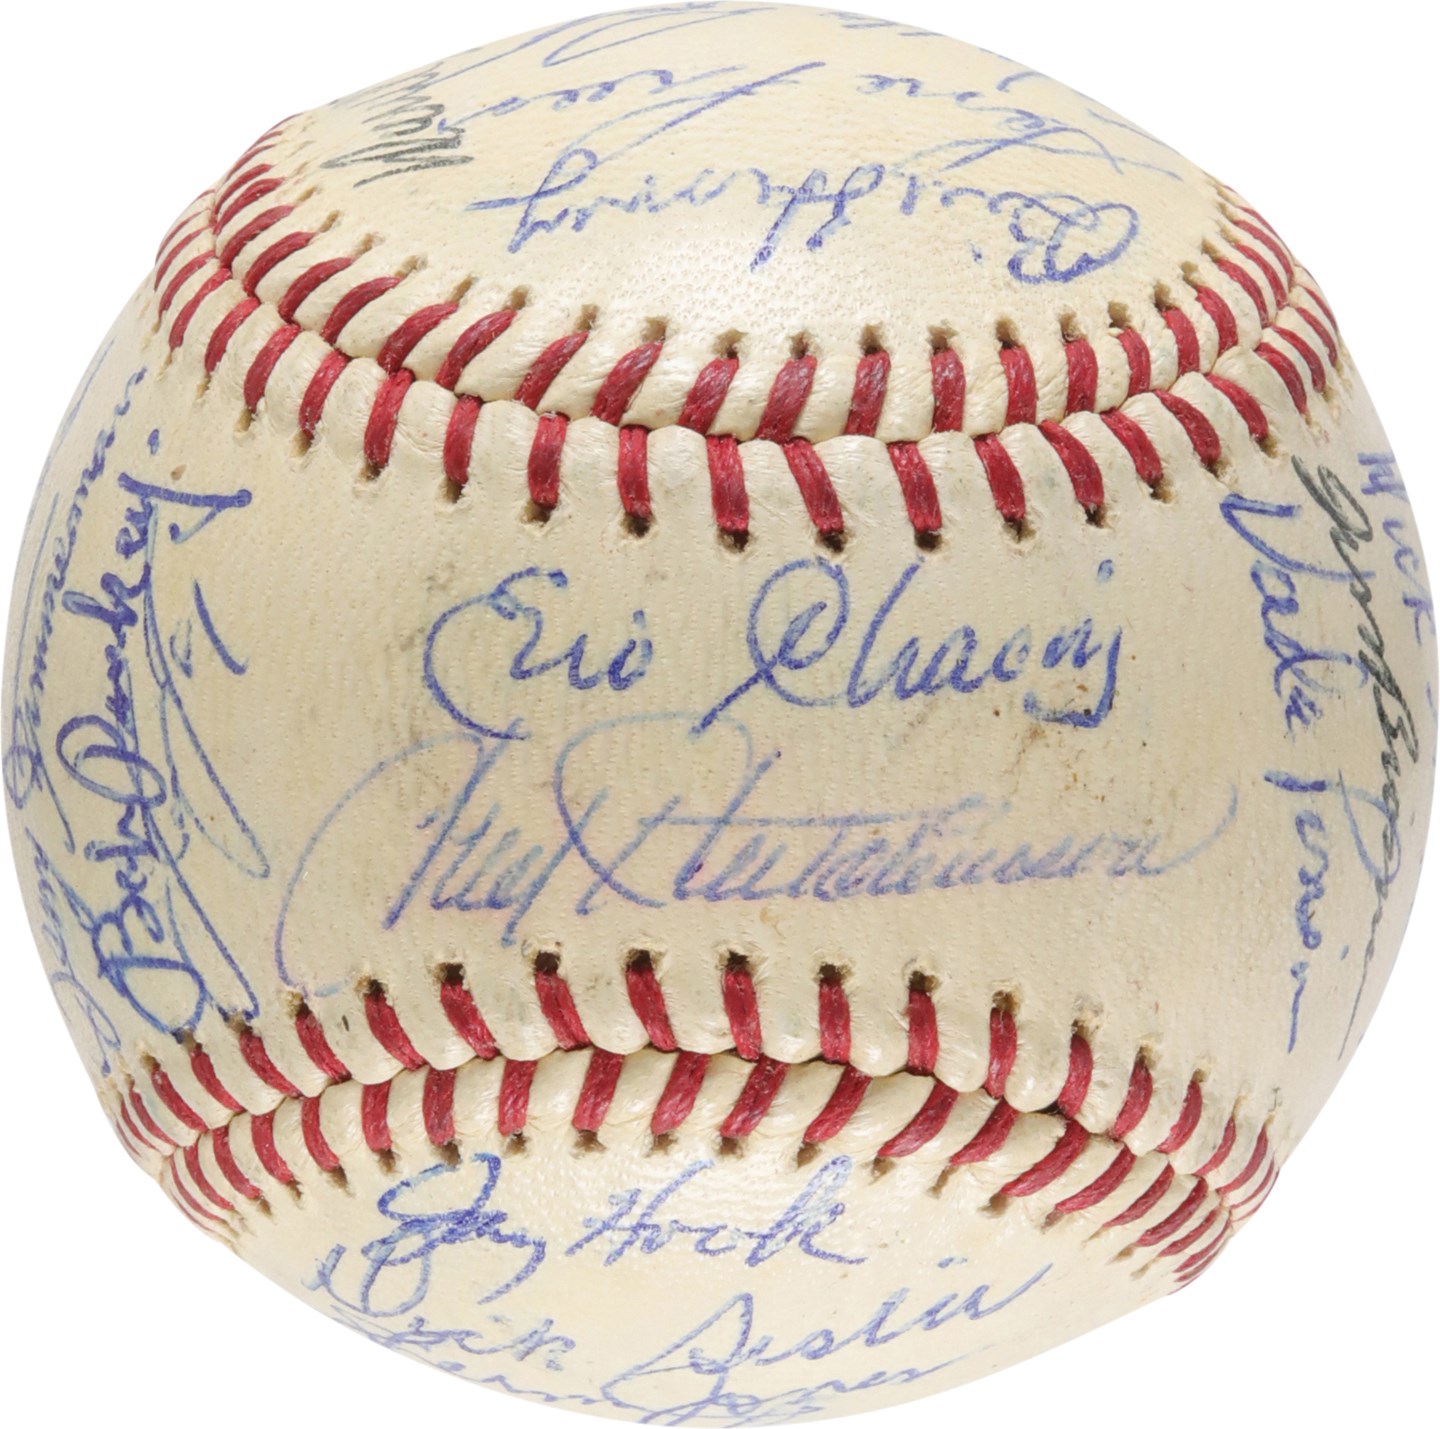 - 1961 Cincinnati Reds Team-Signed Baseball